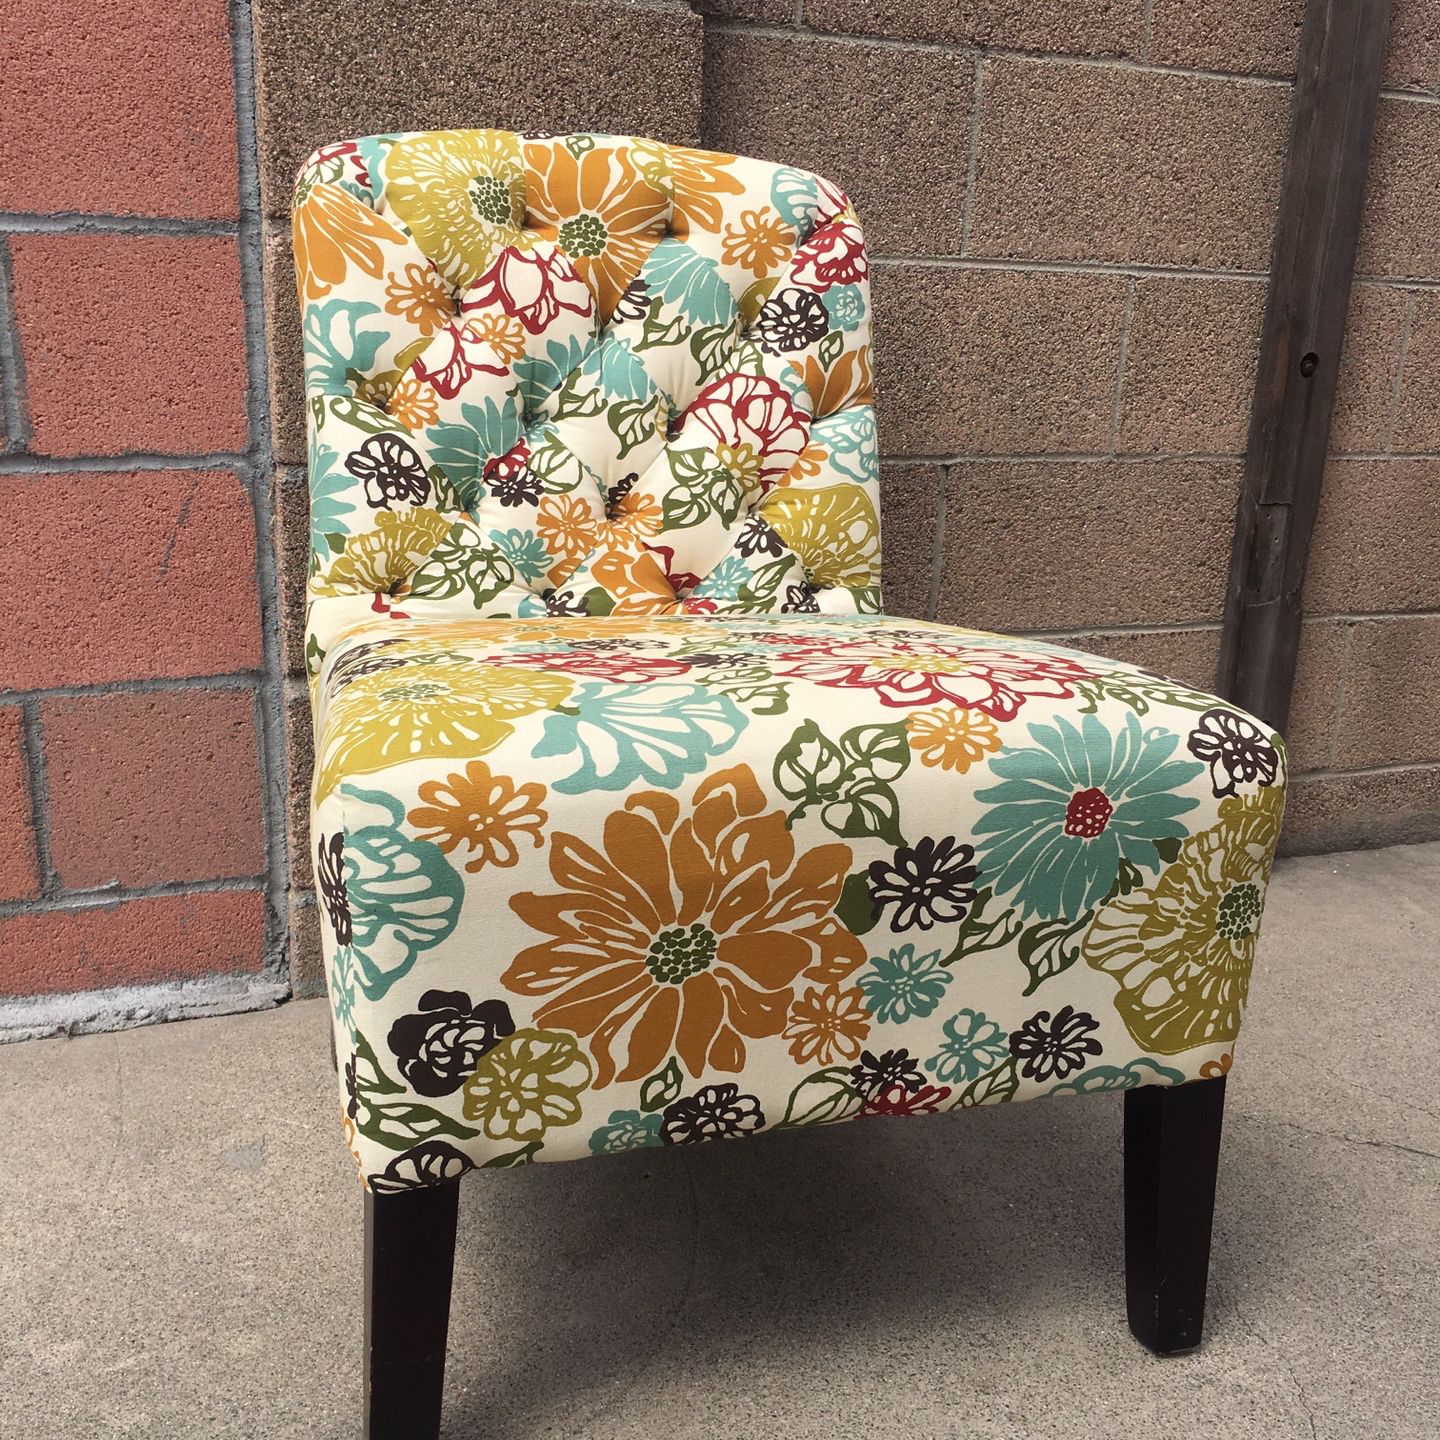 Pier 1 Imports- Adorable Floral Chair